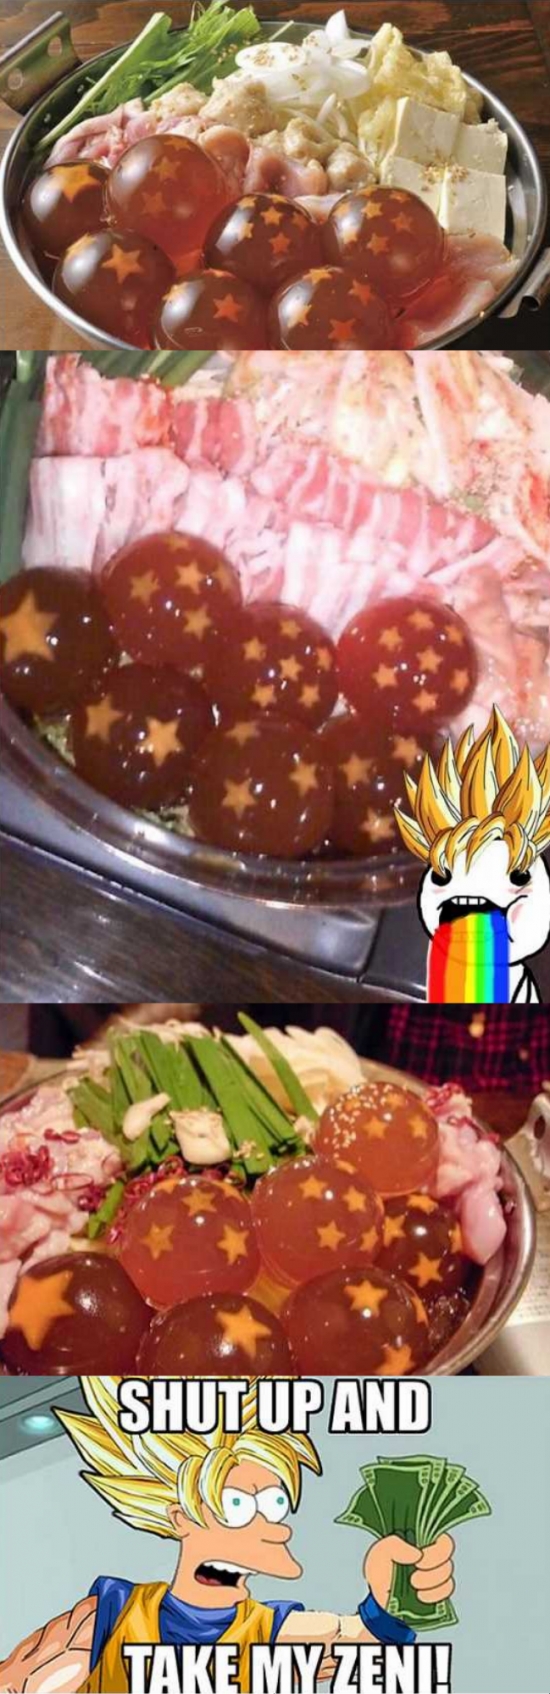 Fry - La comida que todo fan de Dragon Ball desearía comer